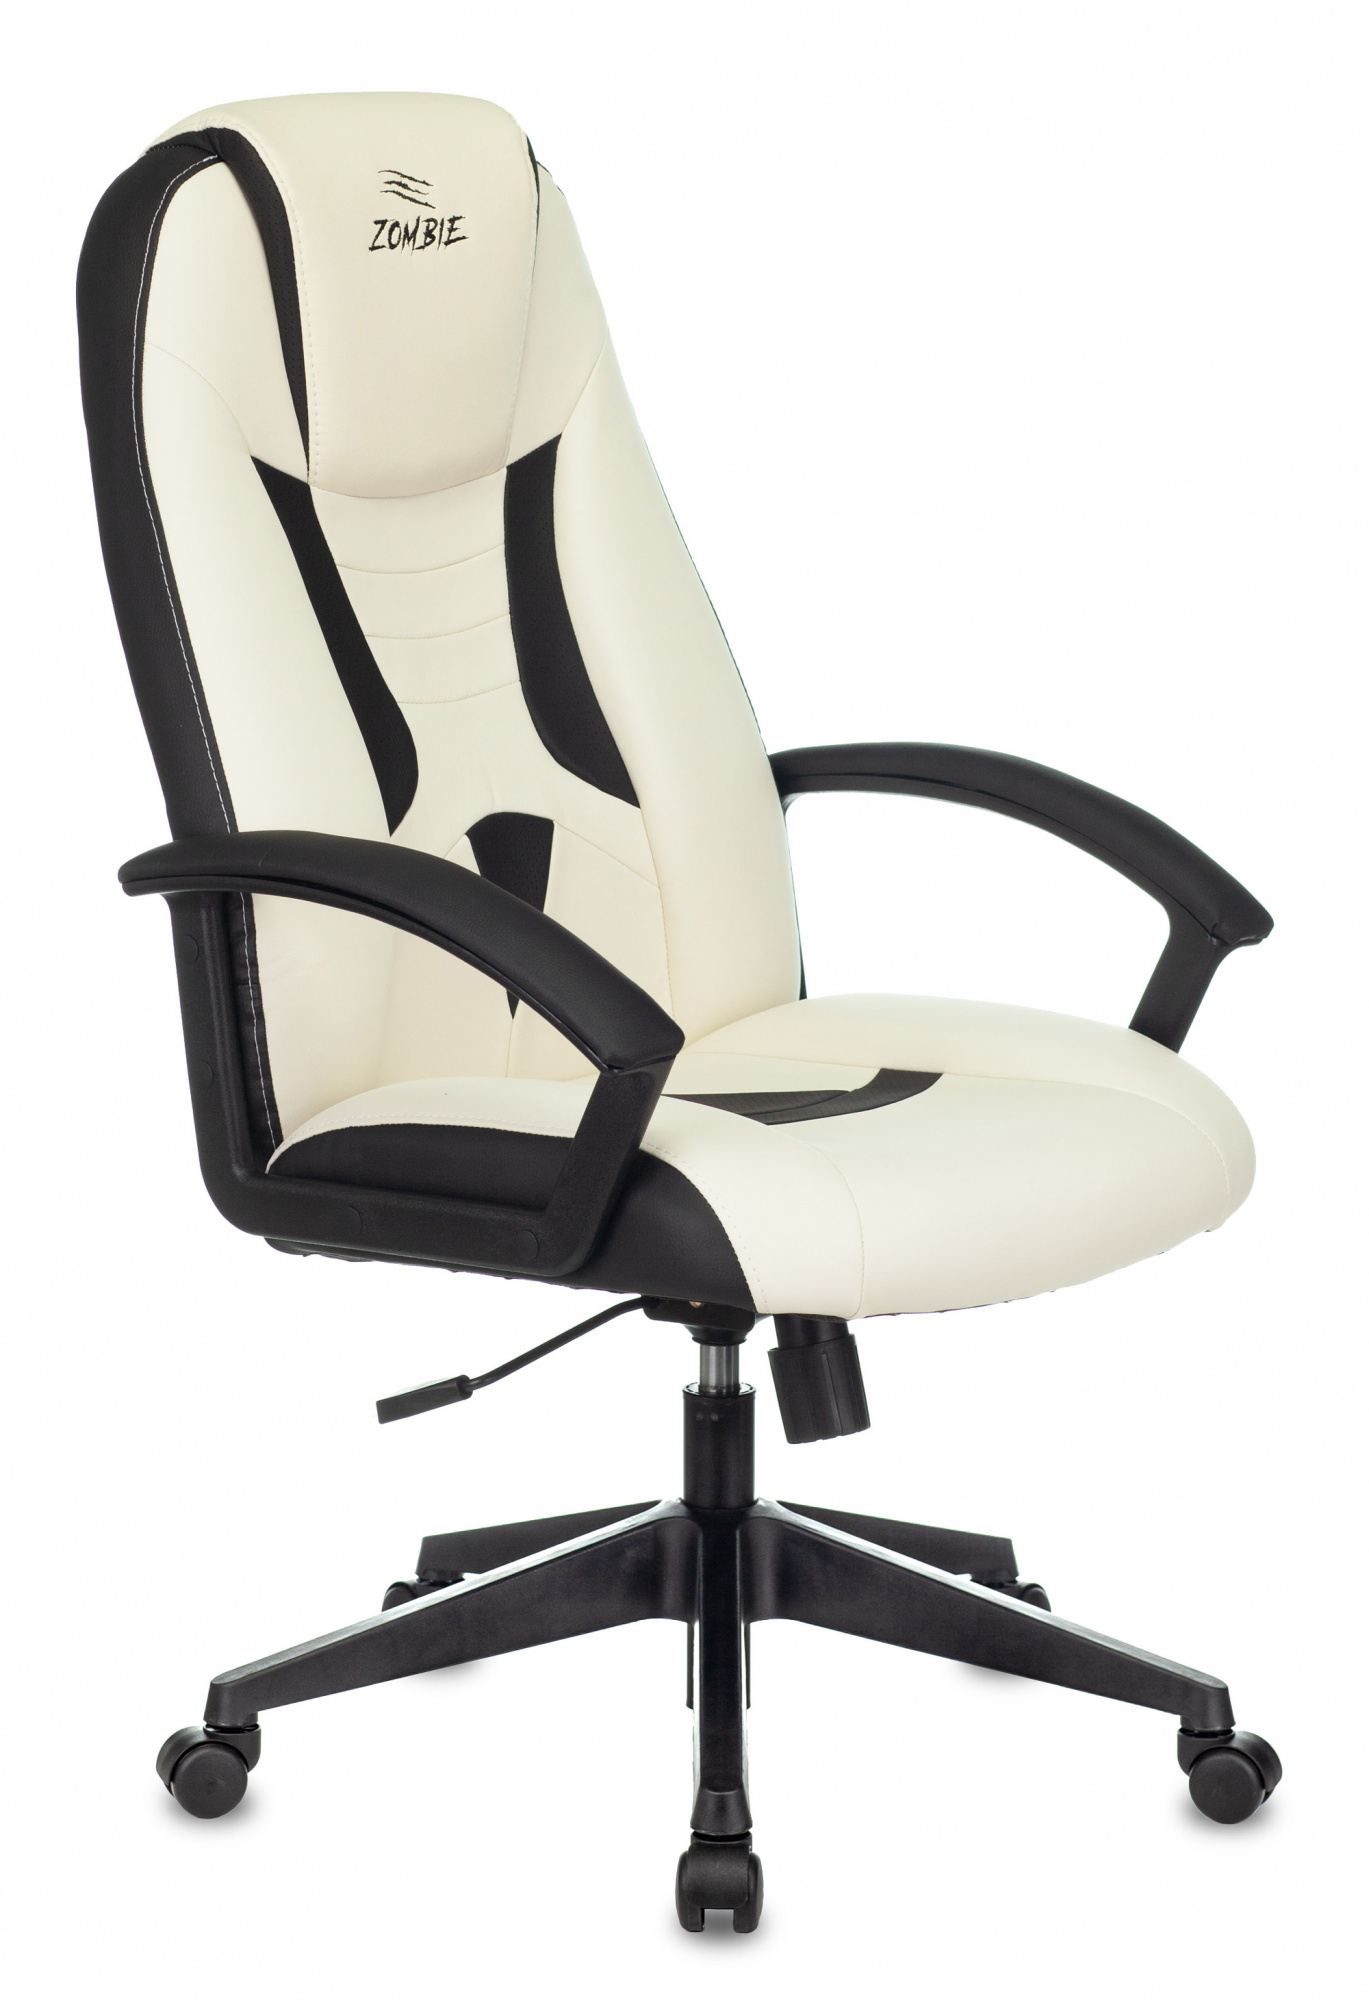 Игровые кресла  E2E4 Кресло игровое Бюрократ ZOMBIE 8, белый/черный (ZOMBIE 8 WHITE)